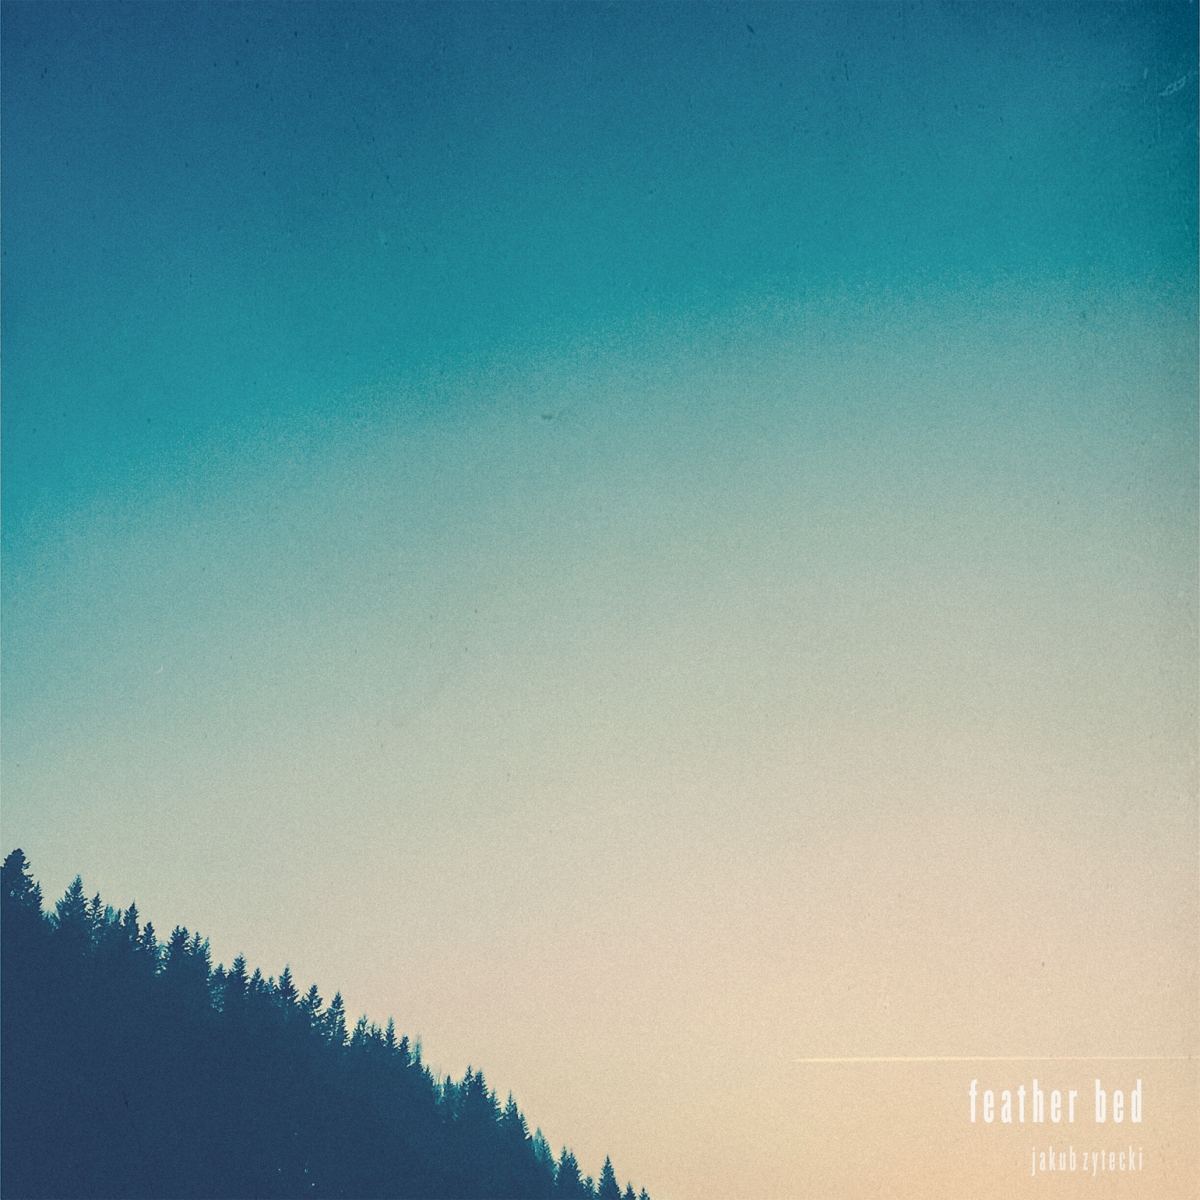 Jakub Zytecki – Feather Bed/Ladder Head – Album Review